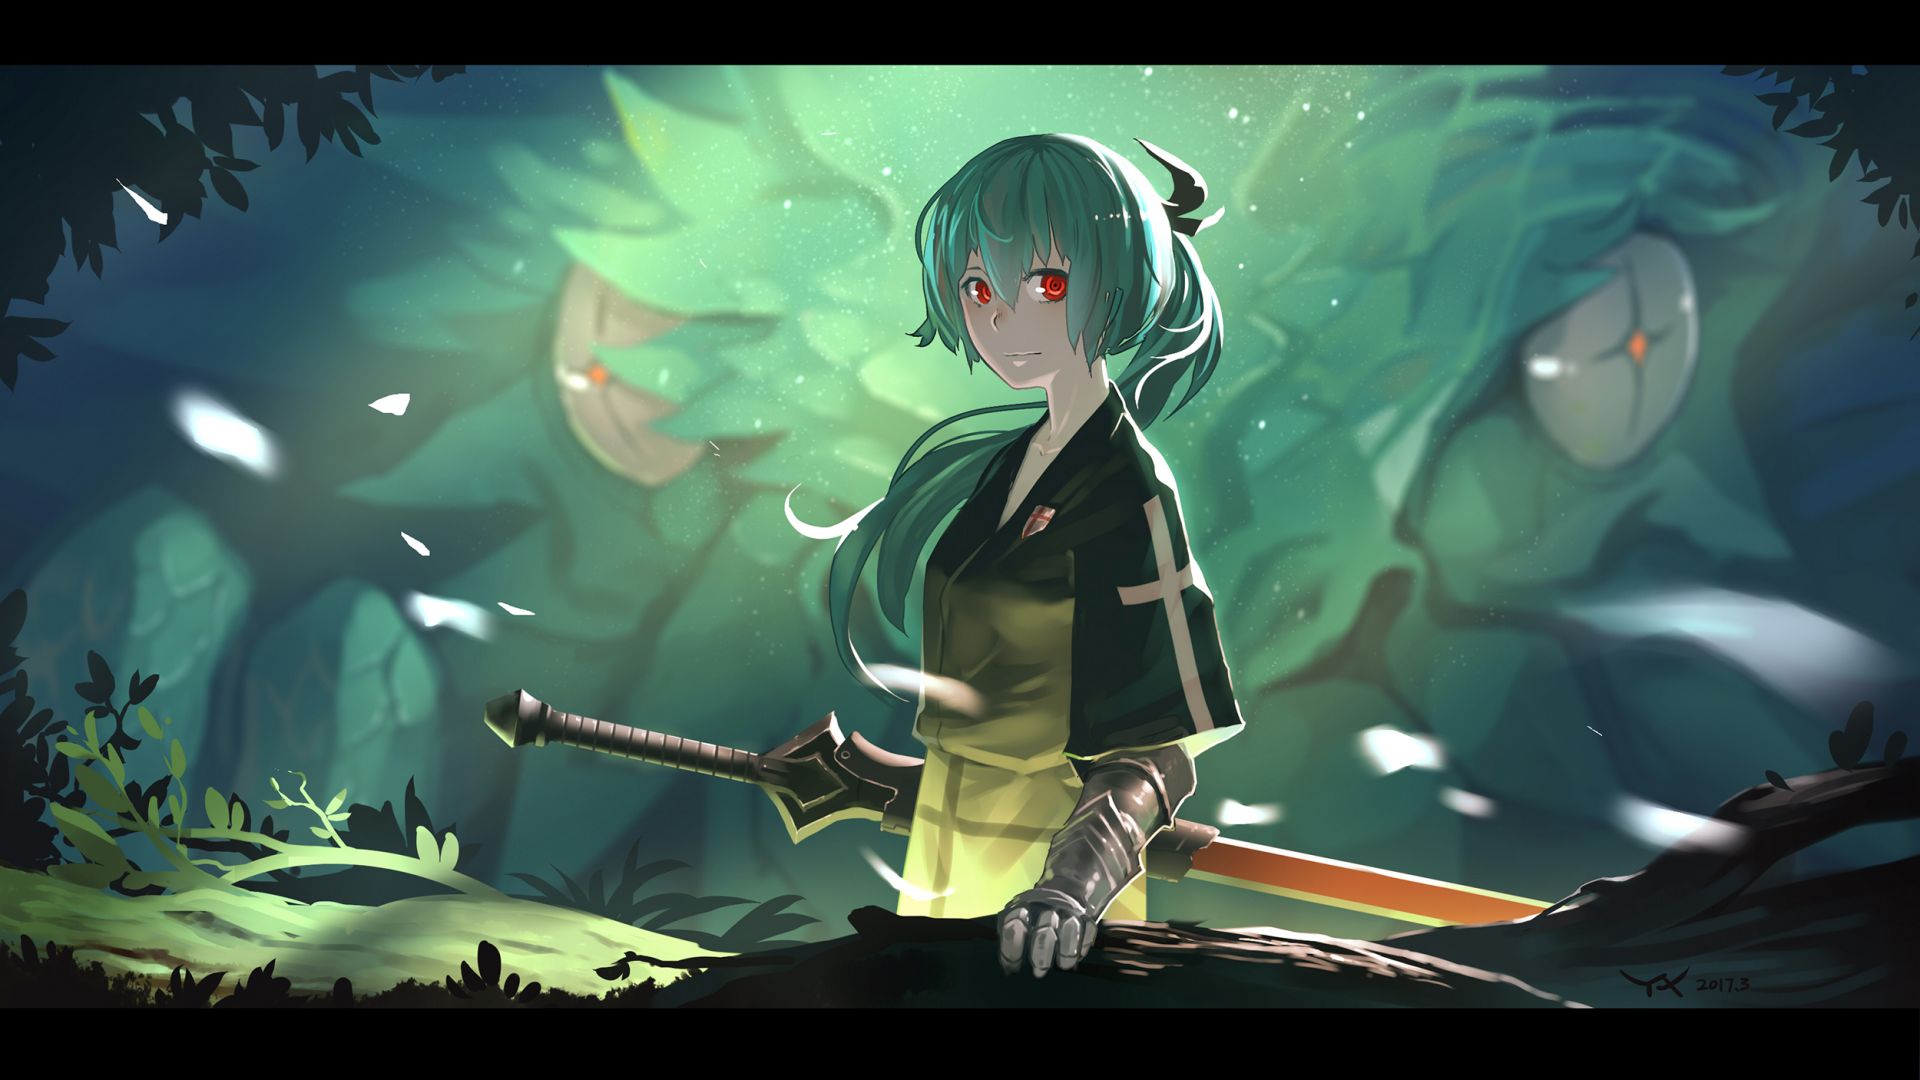 Desktop Wallpaper Warrior In Forest, Original, Anime Girl, Hd Image,  Picture, Background, 9276d8